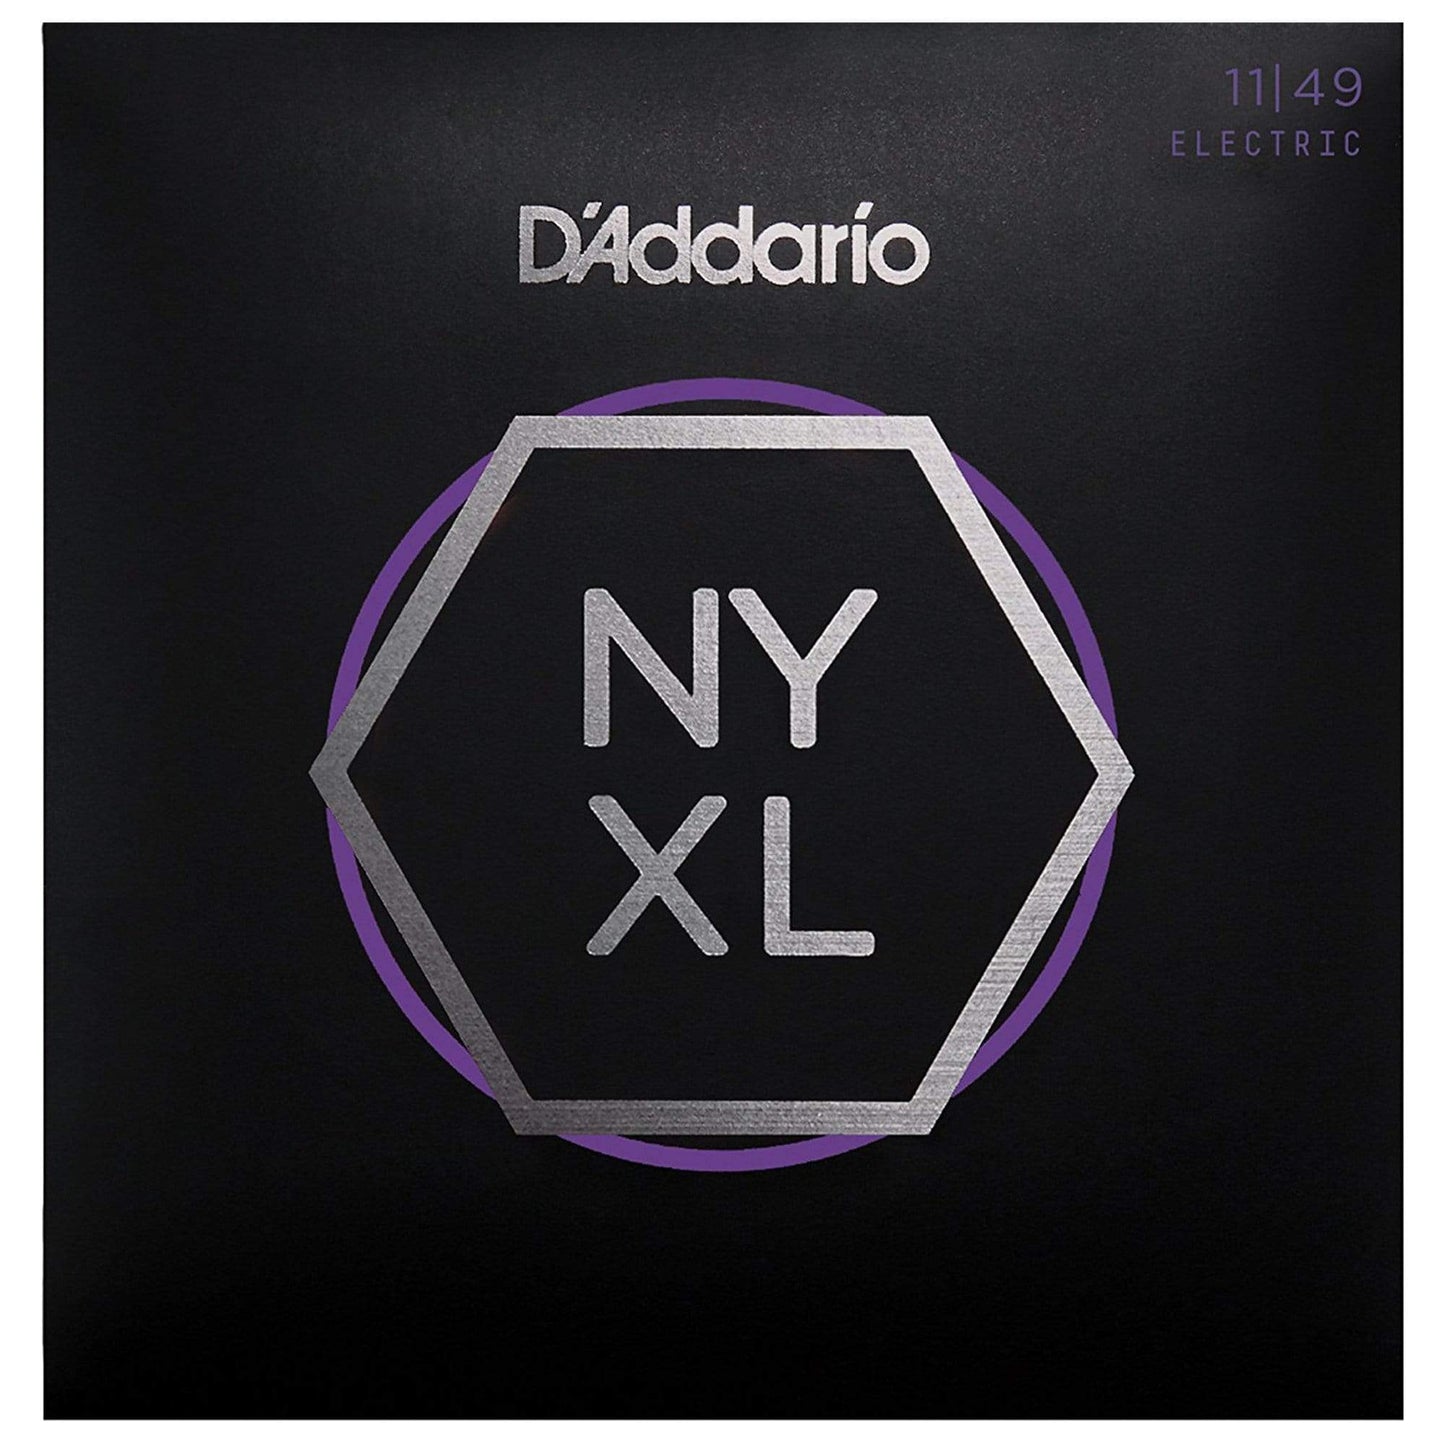 D'Addario NYXL Electric Guitar Strings Medium 11-49 (3 Pack Bundle) Accessories / Strings / Guitar Strings